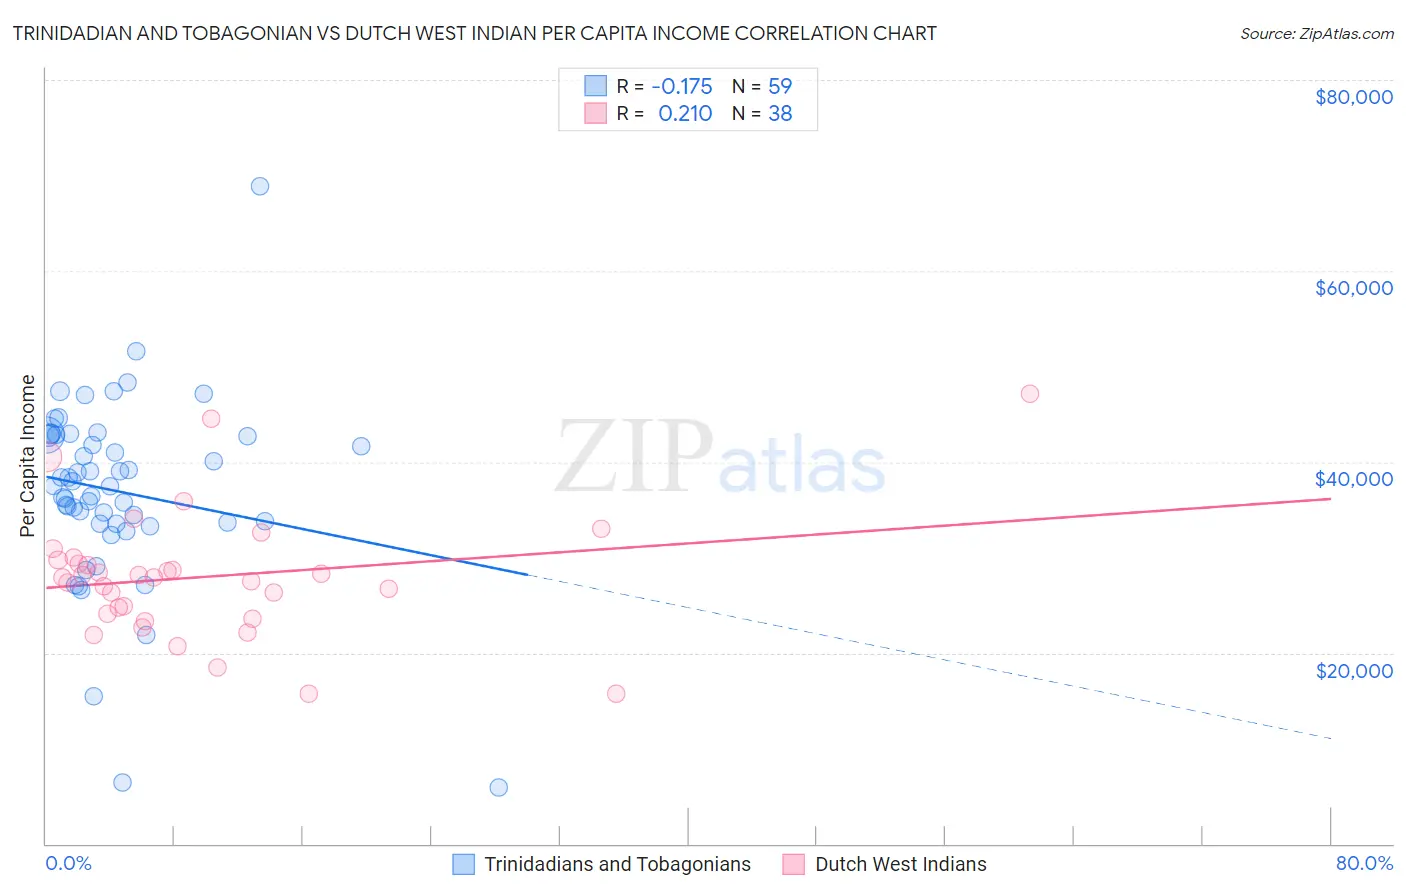 Trinidadian and Tobagonian vs Dutch West Indian Per Capita Income